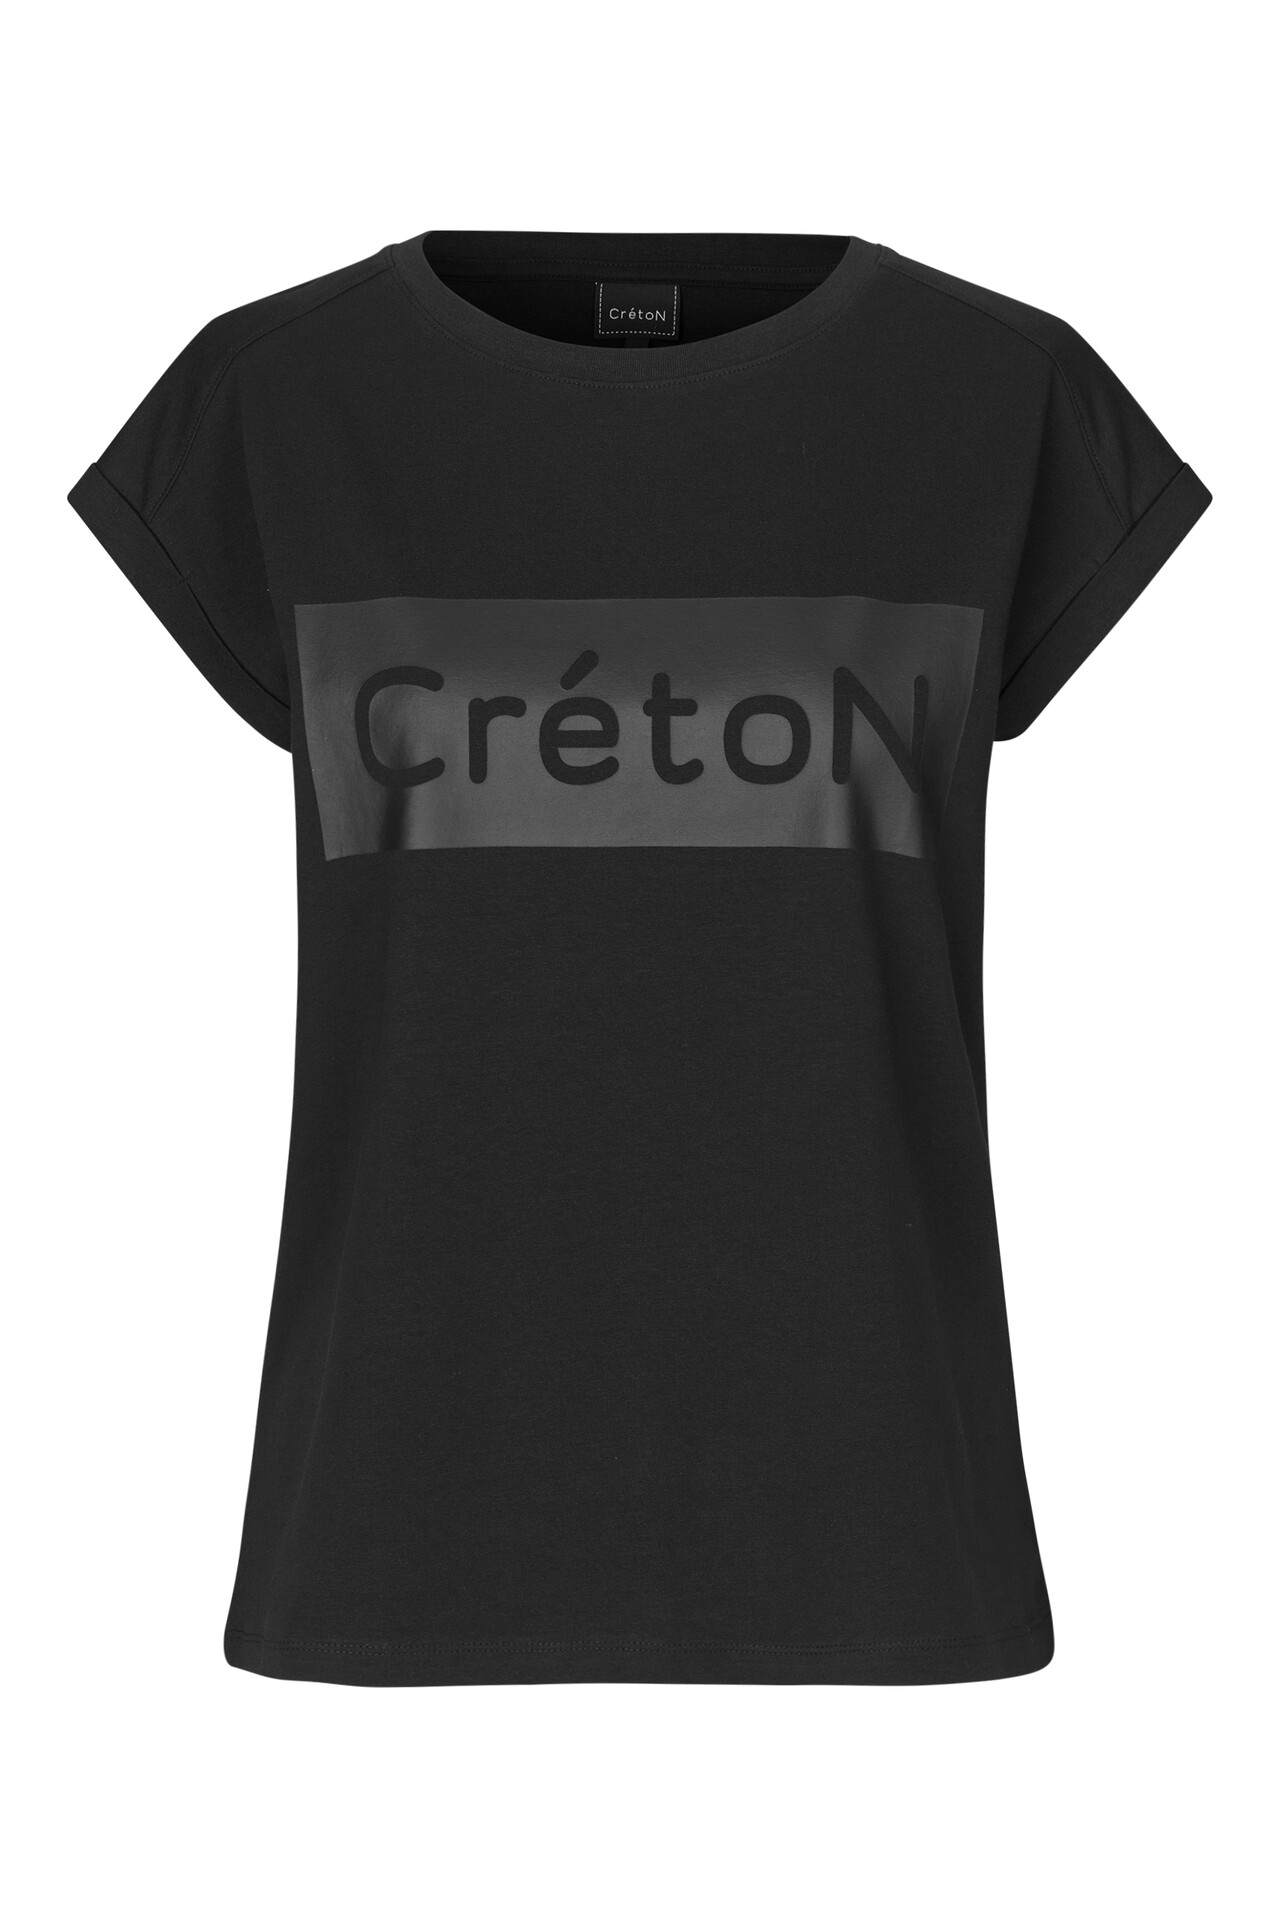 CRÉTON CRTenley C T-shirt  (SORT XL)